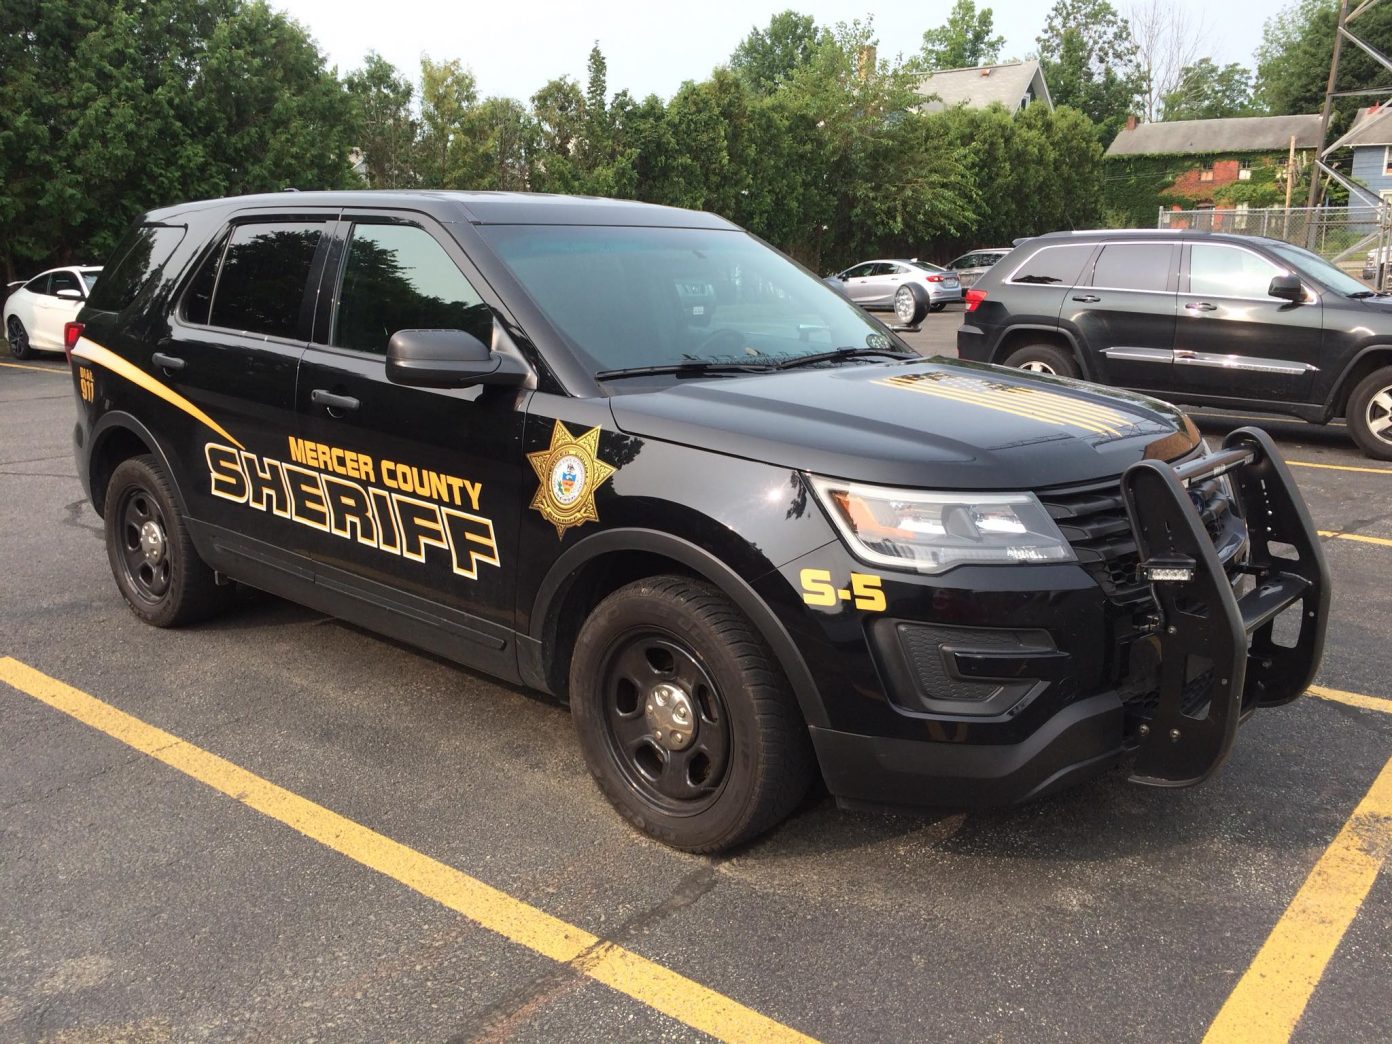 Mercer County Sheriff’s deputies arrested a Davenport woman on meth